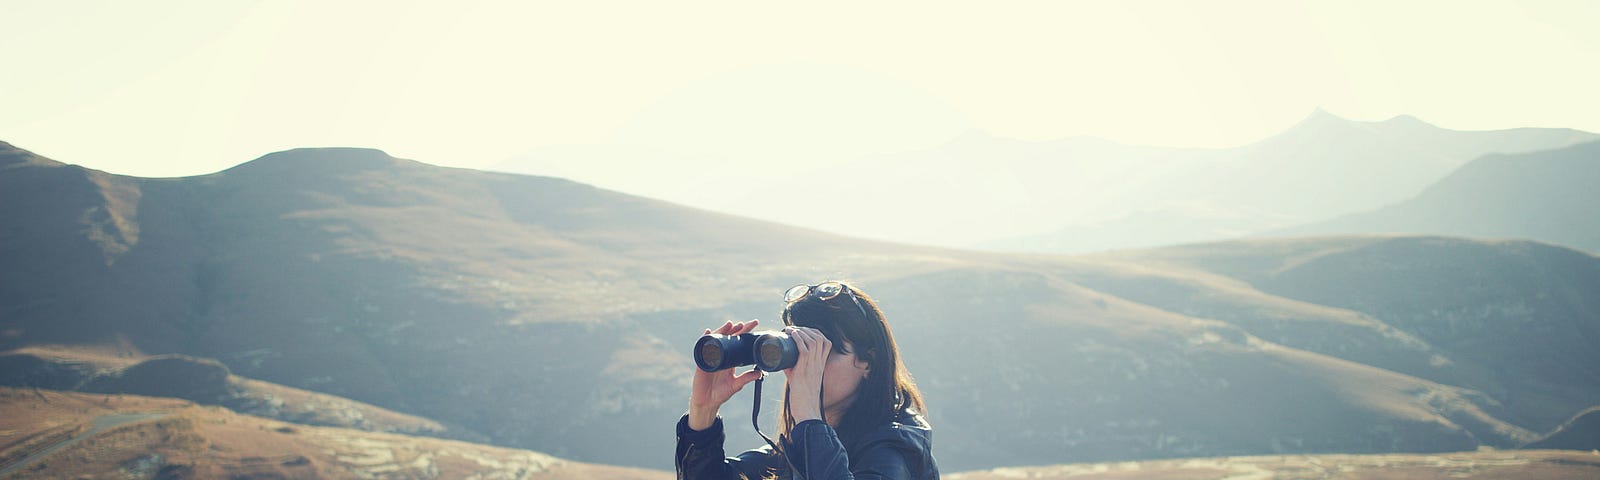 a woman with binoculars, sitting near a mountain hiking trail